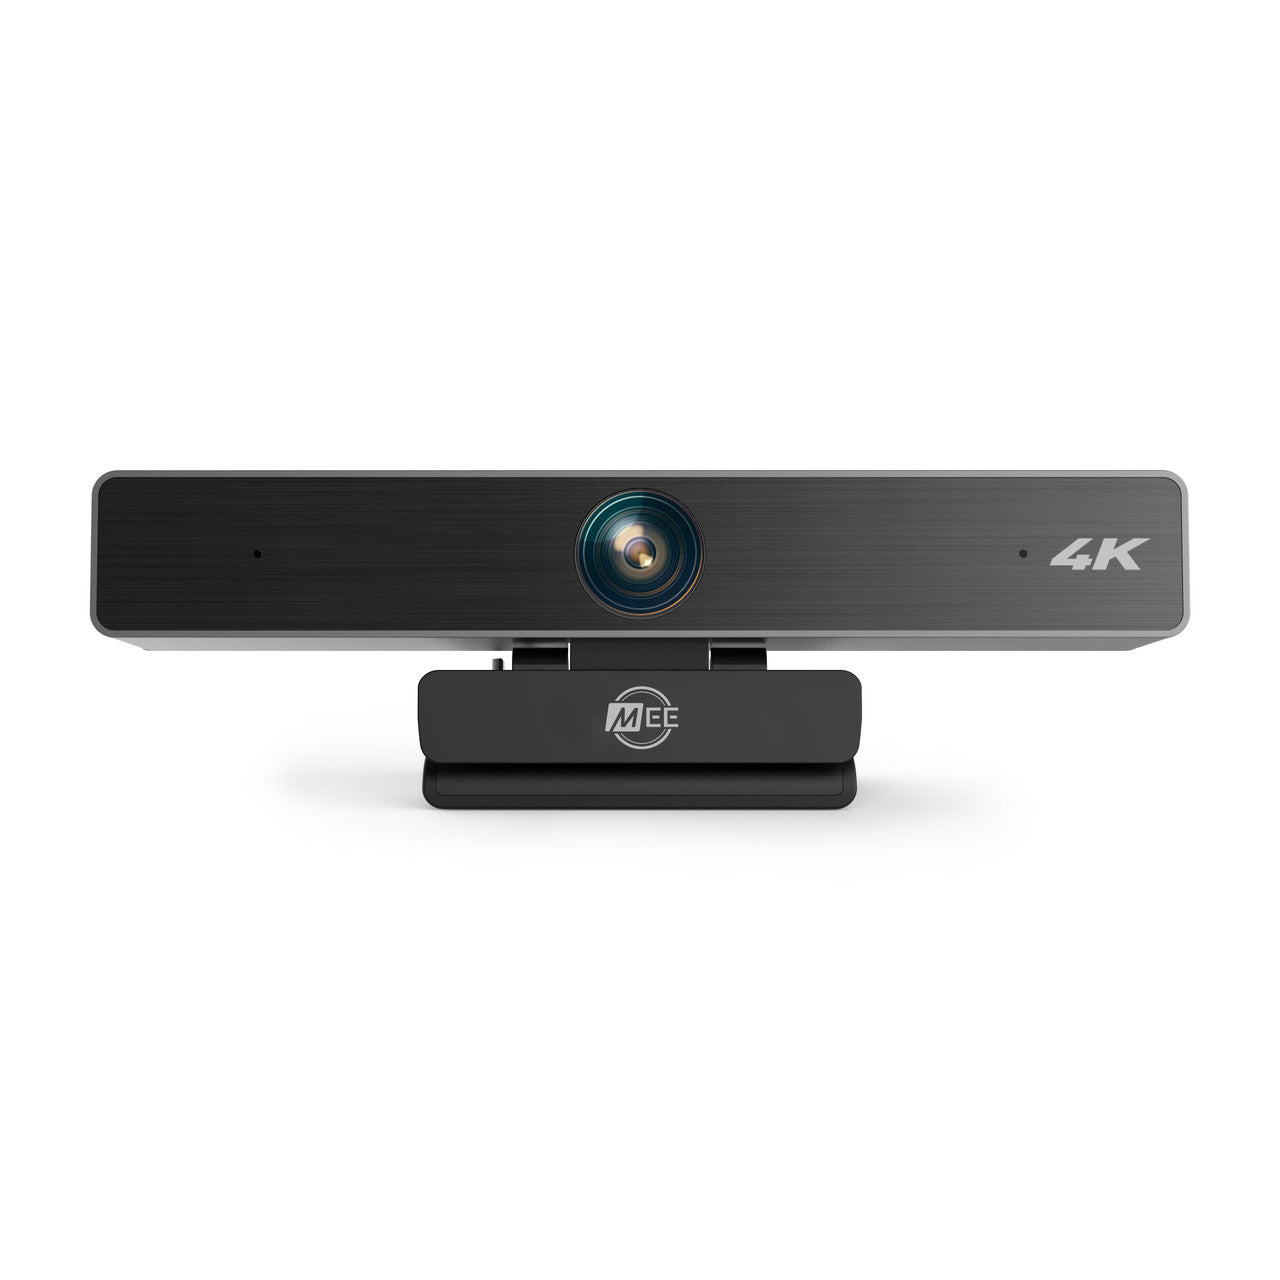 Image of C11Z 4K Ultra HD Conference Webcam.